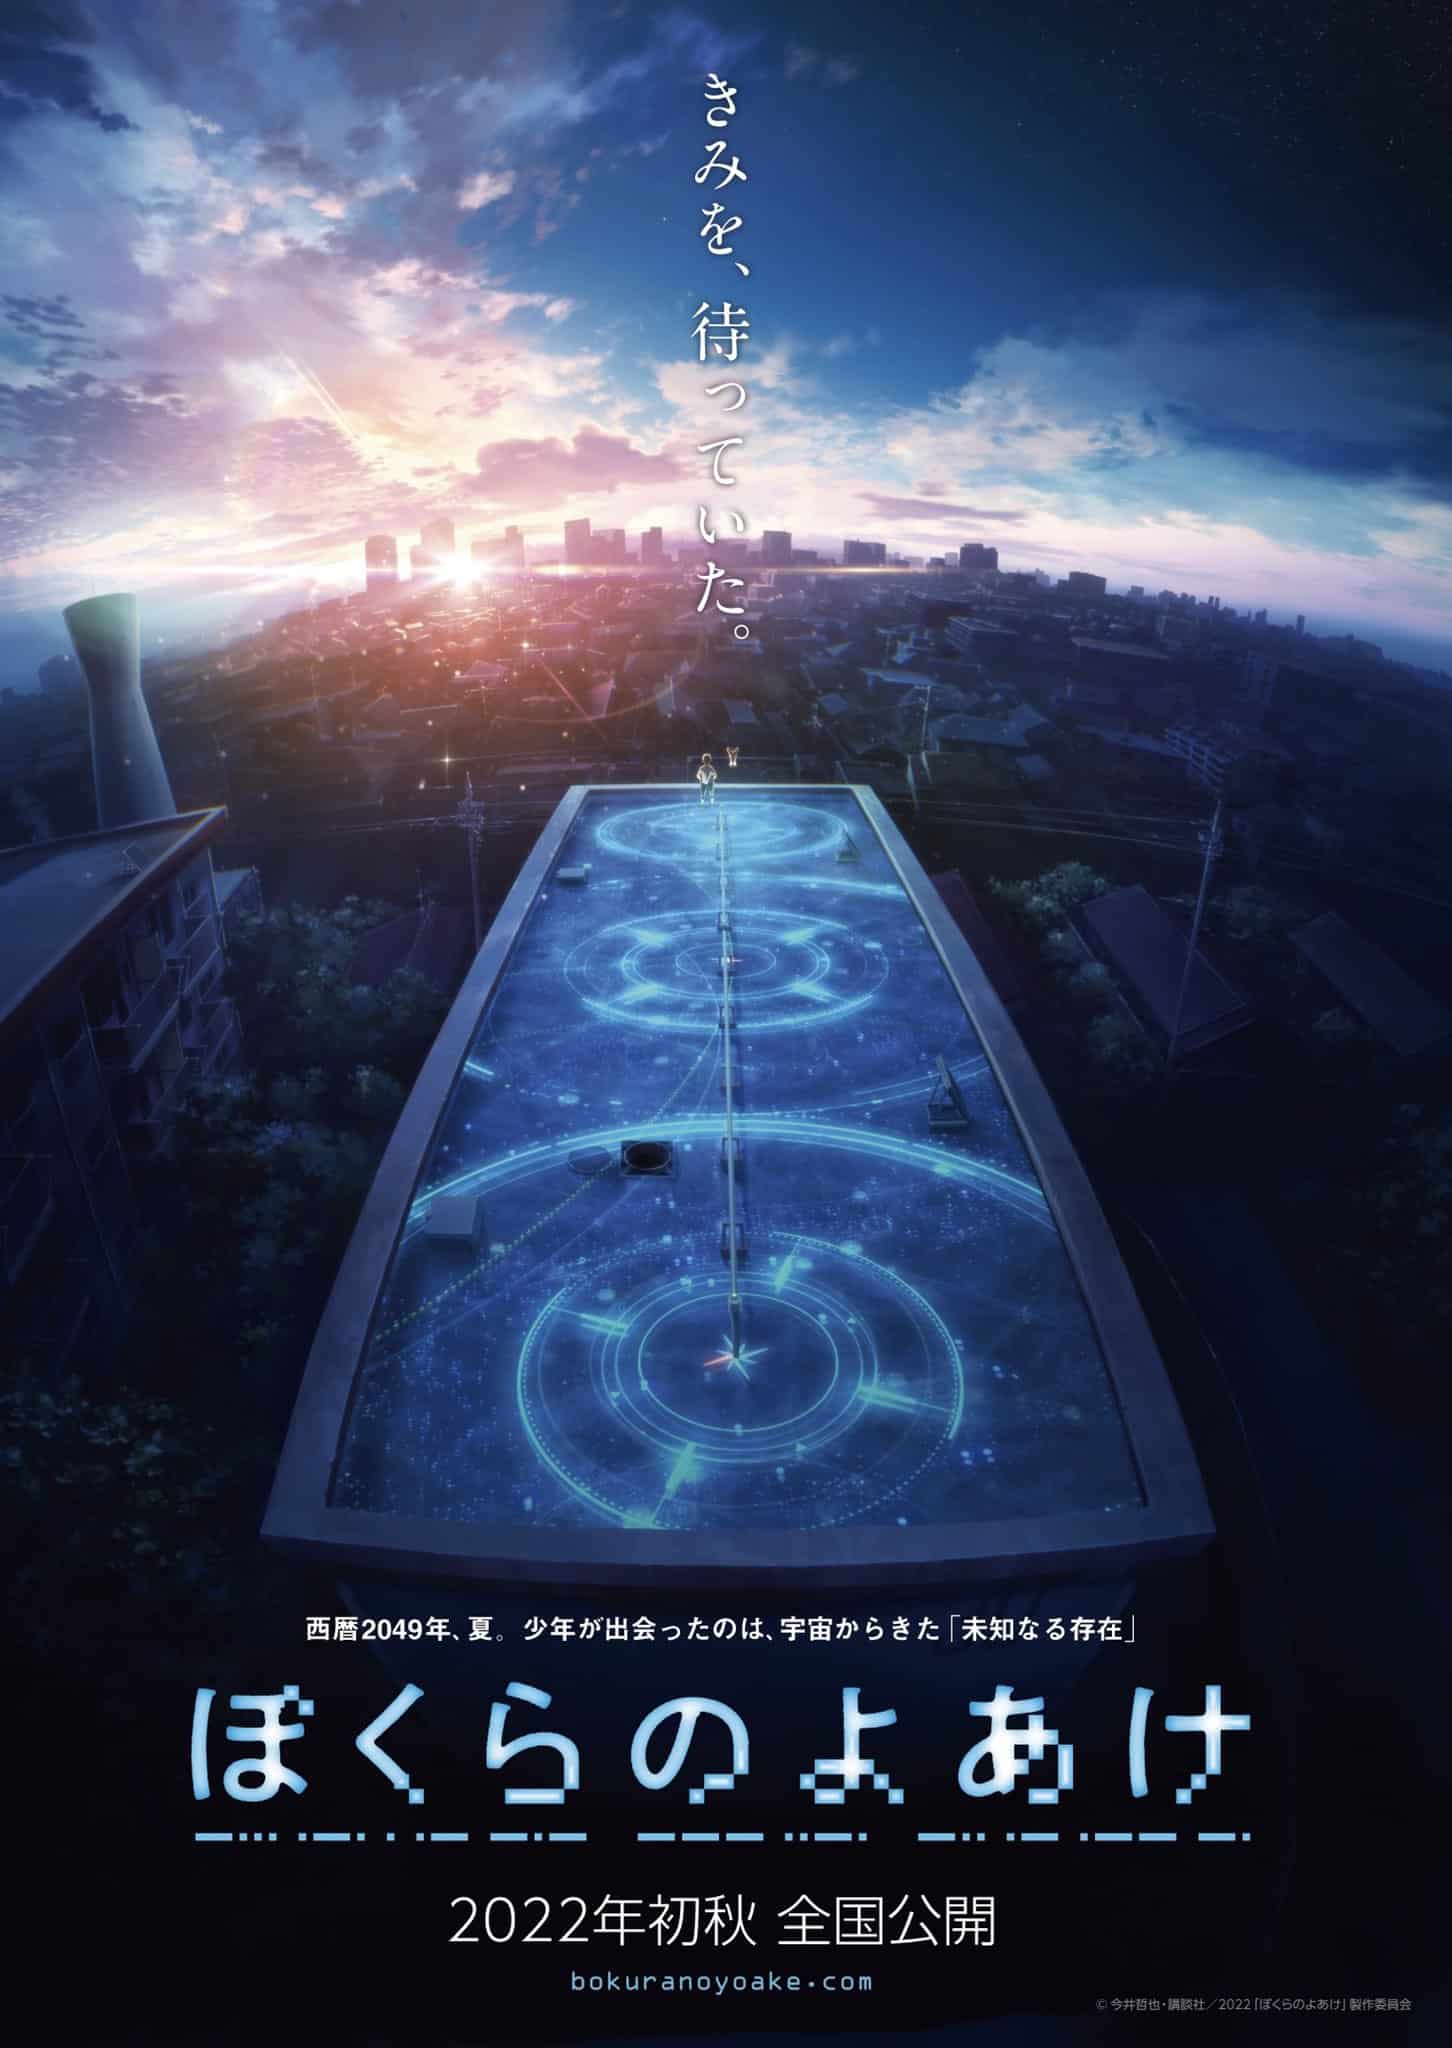 Annonce du film Bokura no Yoake pour lautomne 2022